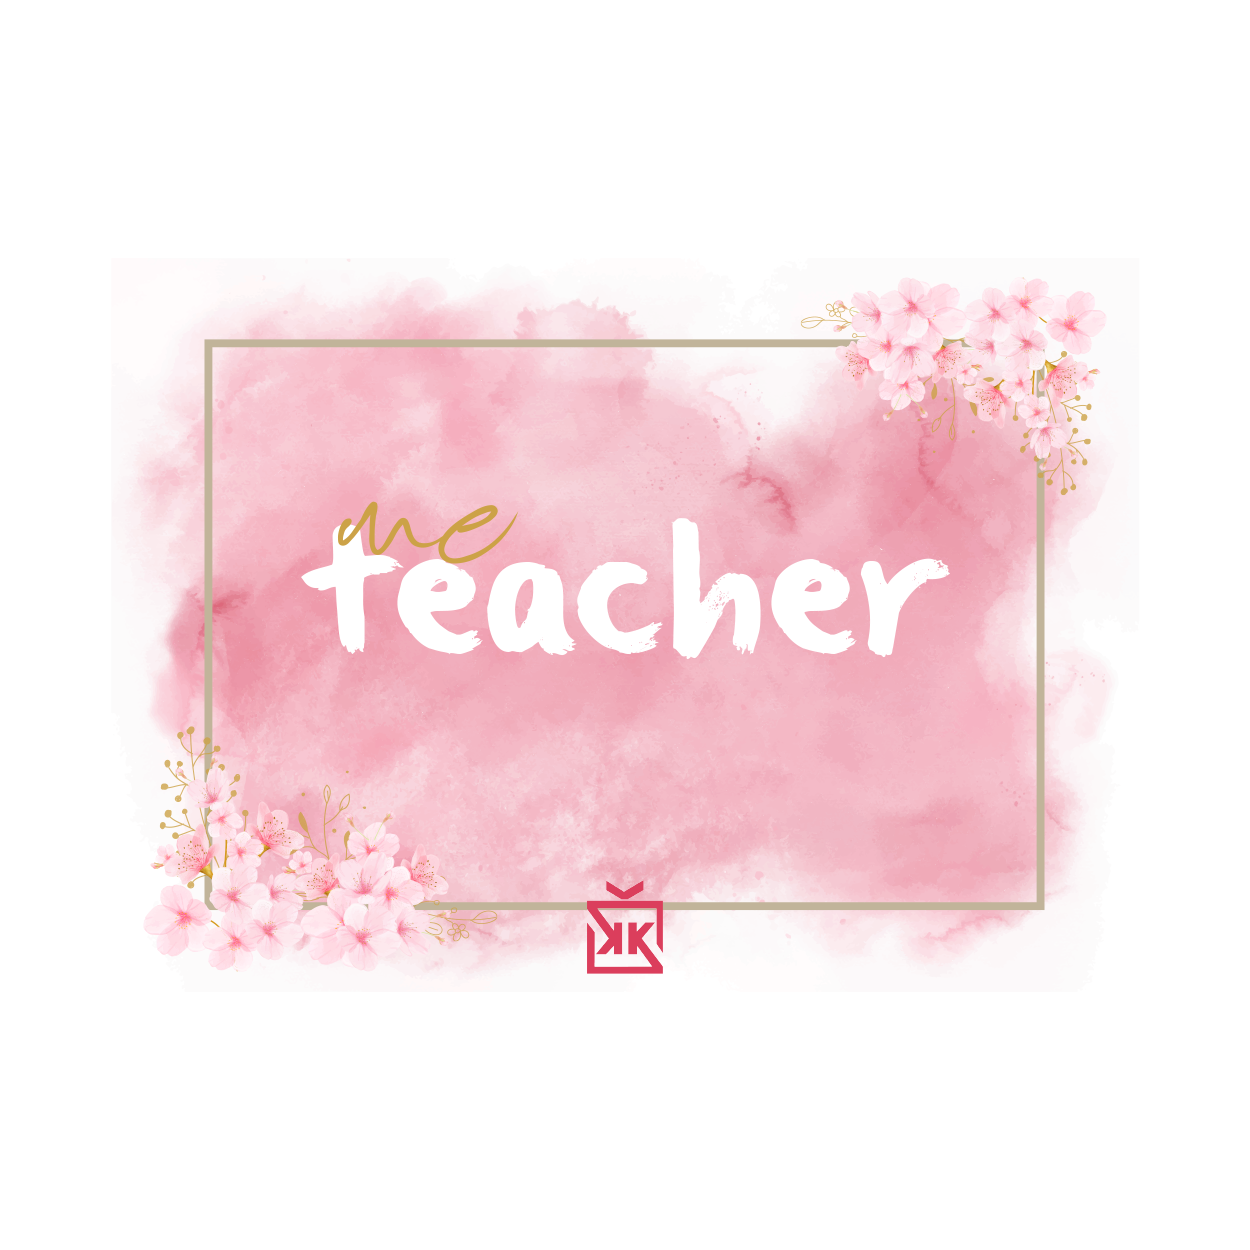 347721-me-teacher-motto-karti-yatay